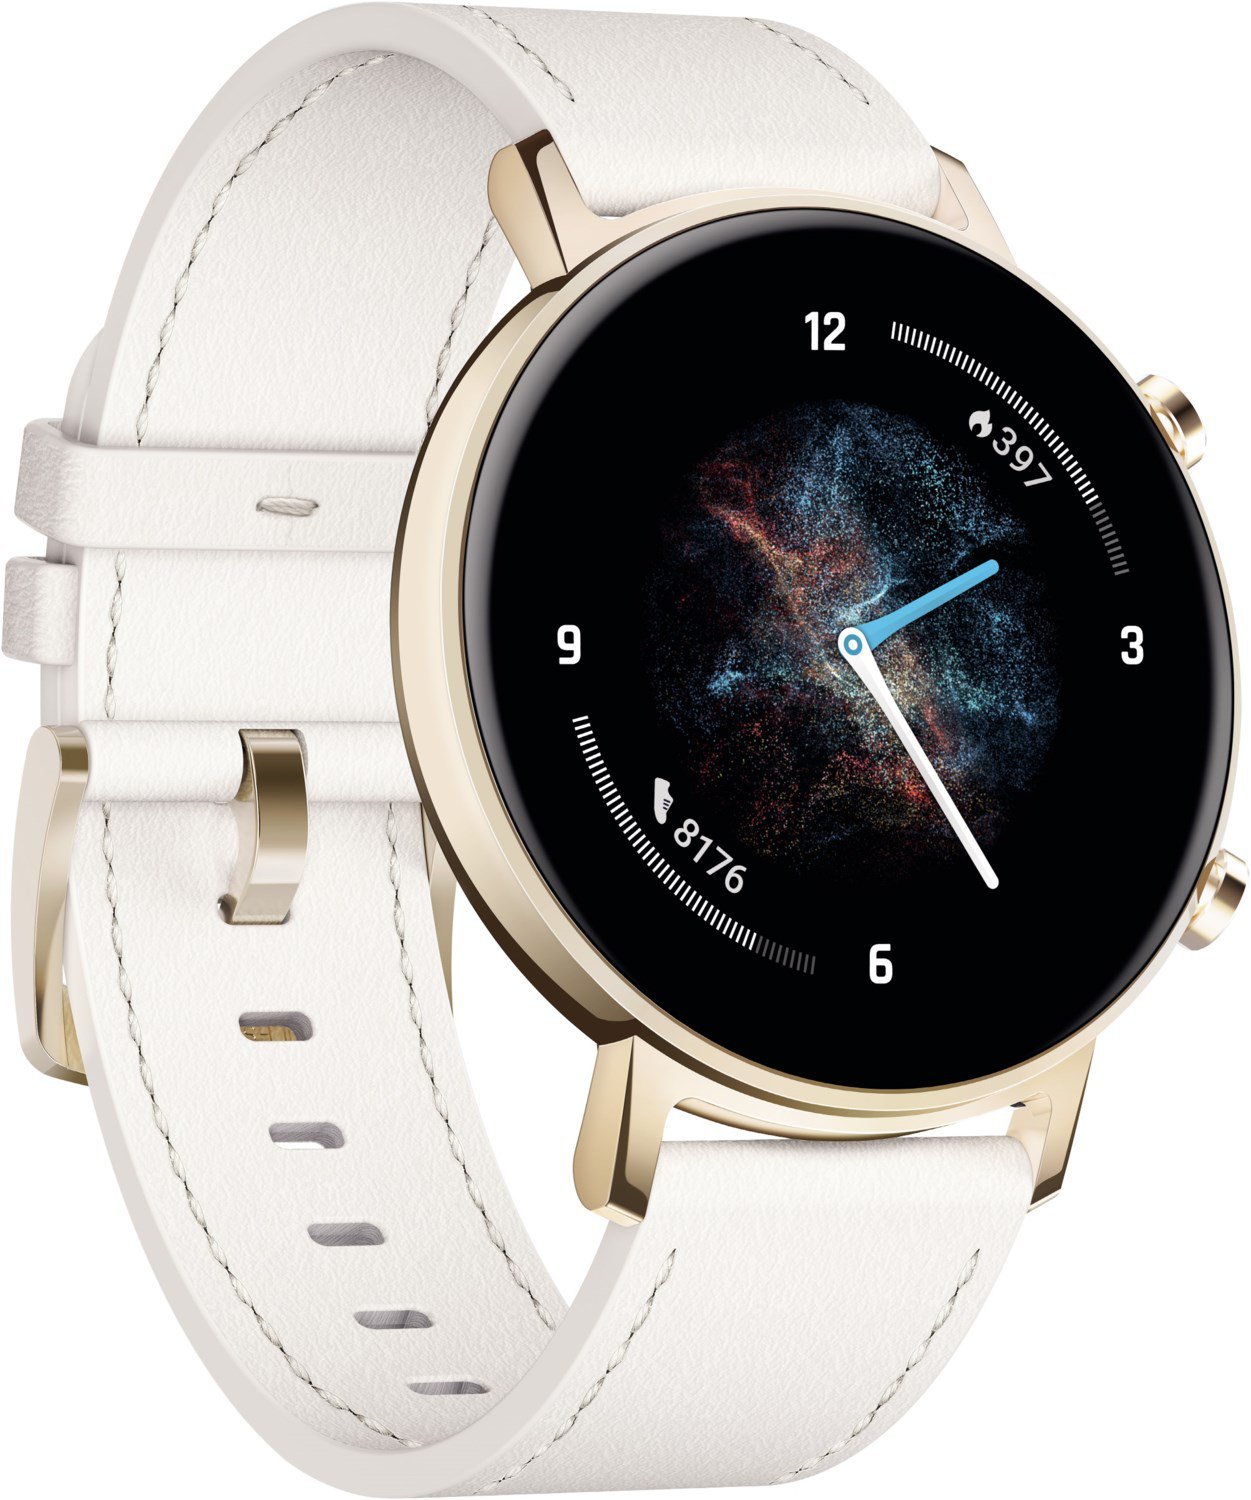 Huawei Watch GT Smartwatch (3,5 Cm/1,39 Zoll, RTOS ...